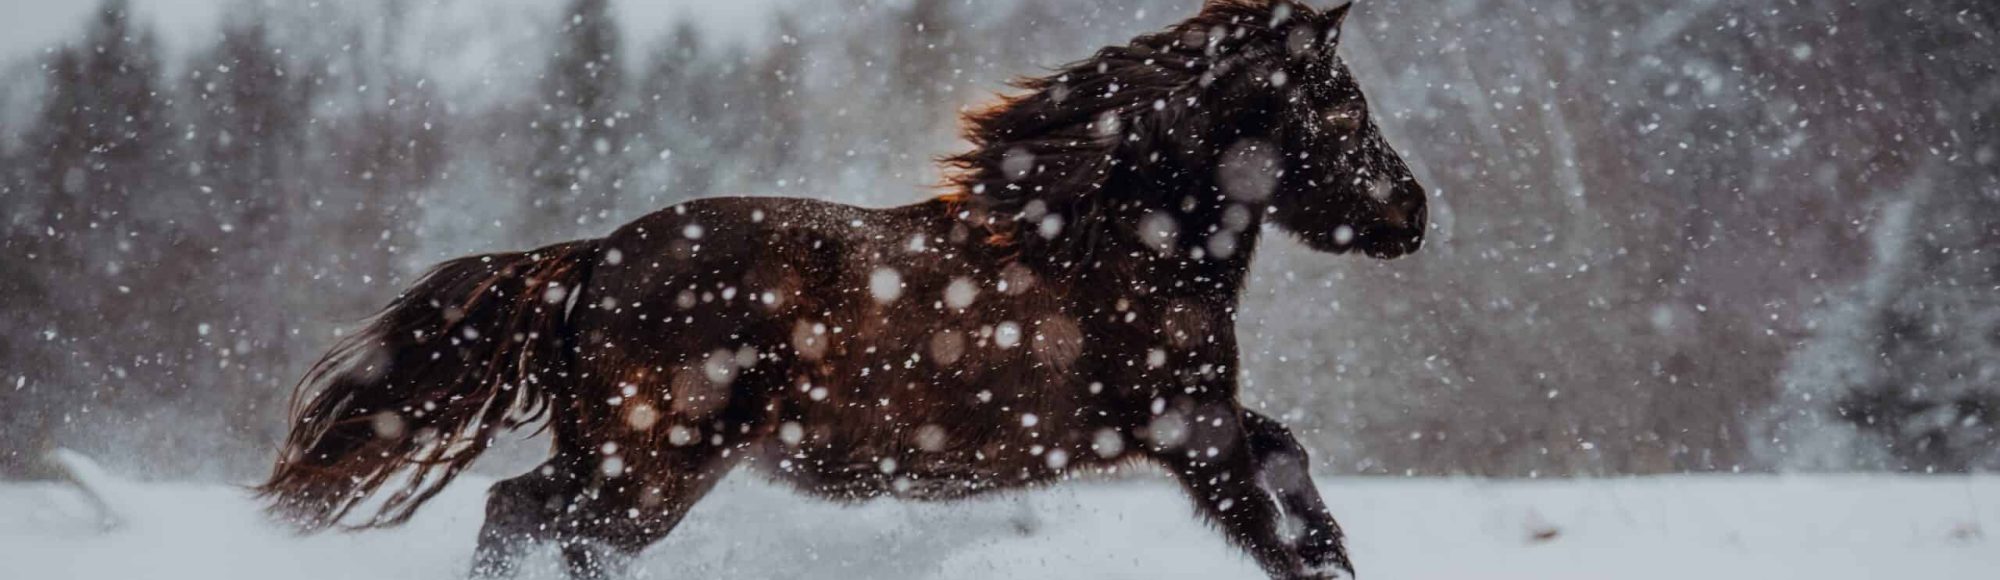 Dark bay Icelandic Horse cantering through snowy field in heavy snowfall